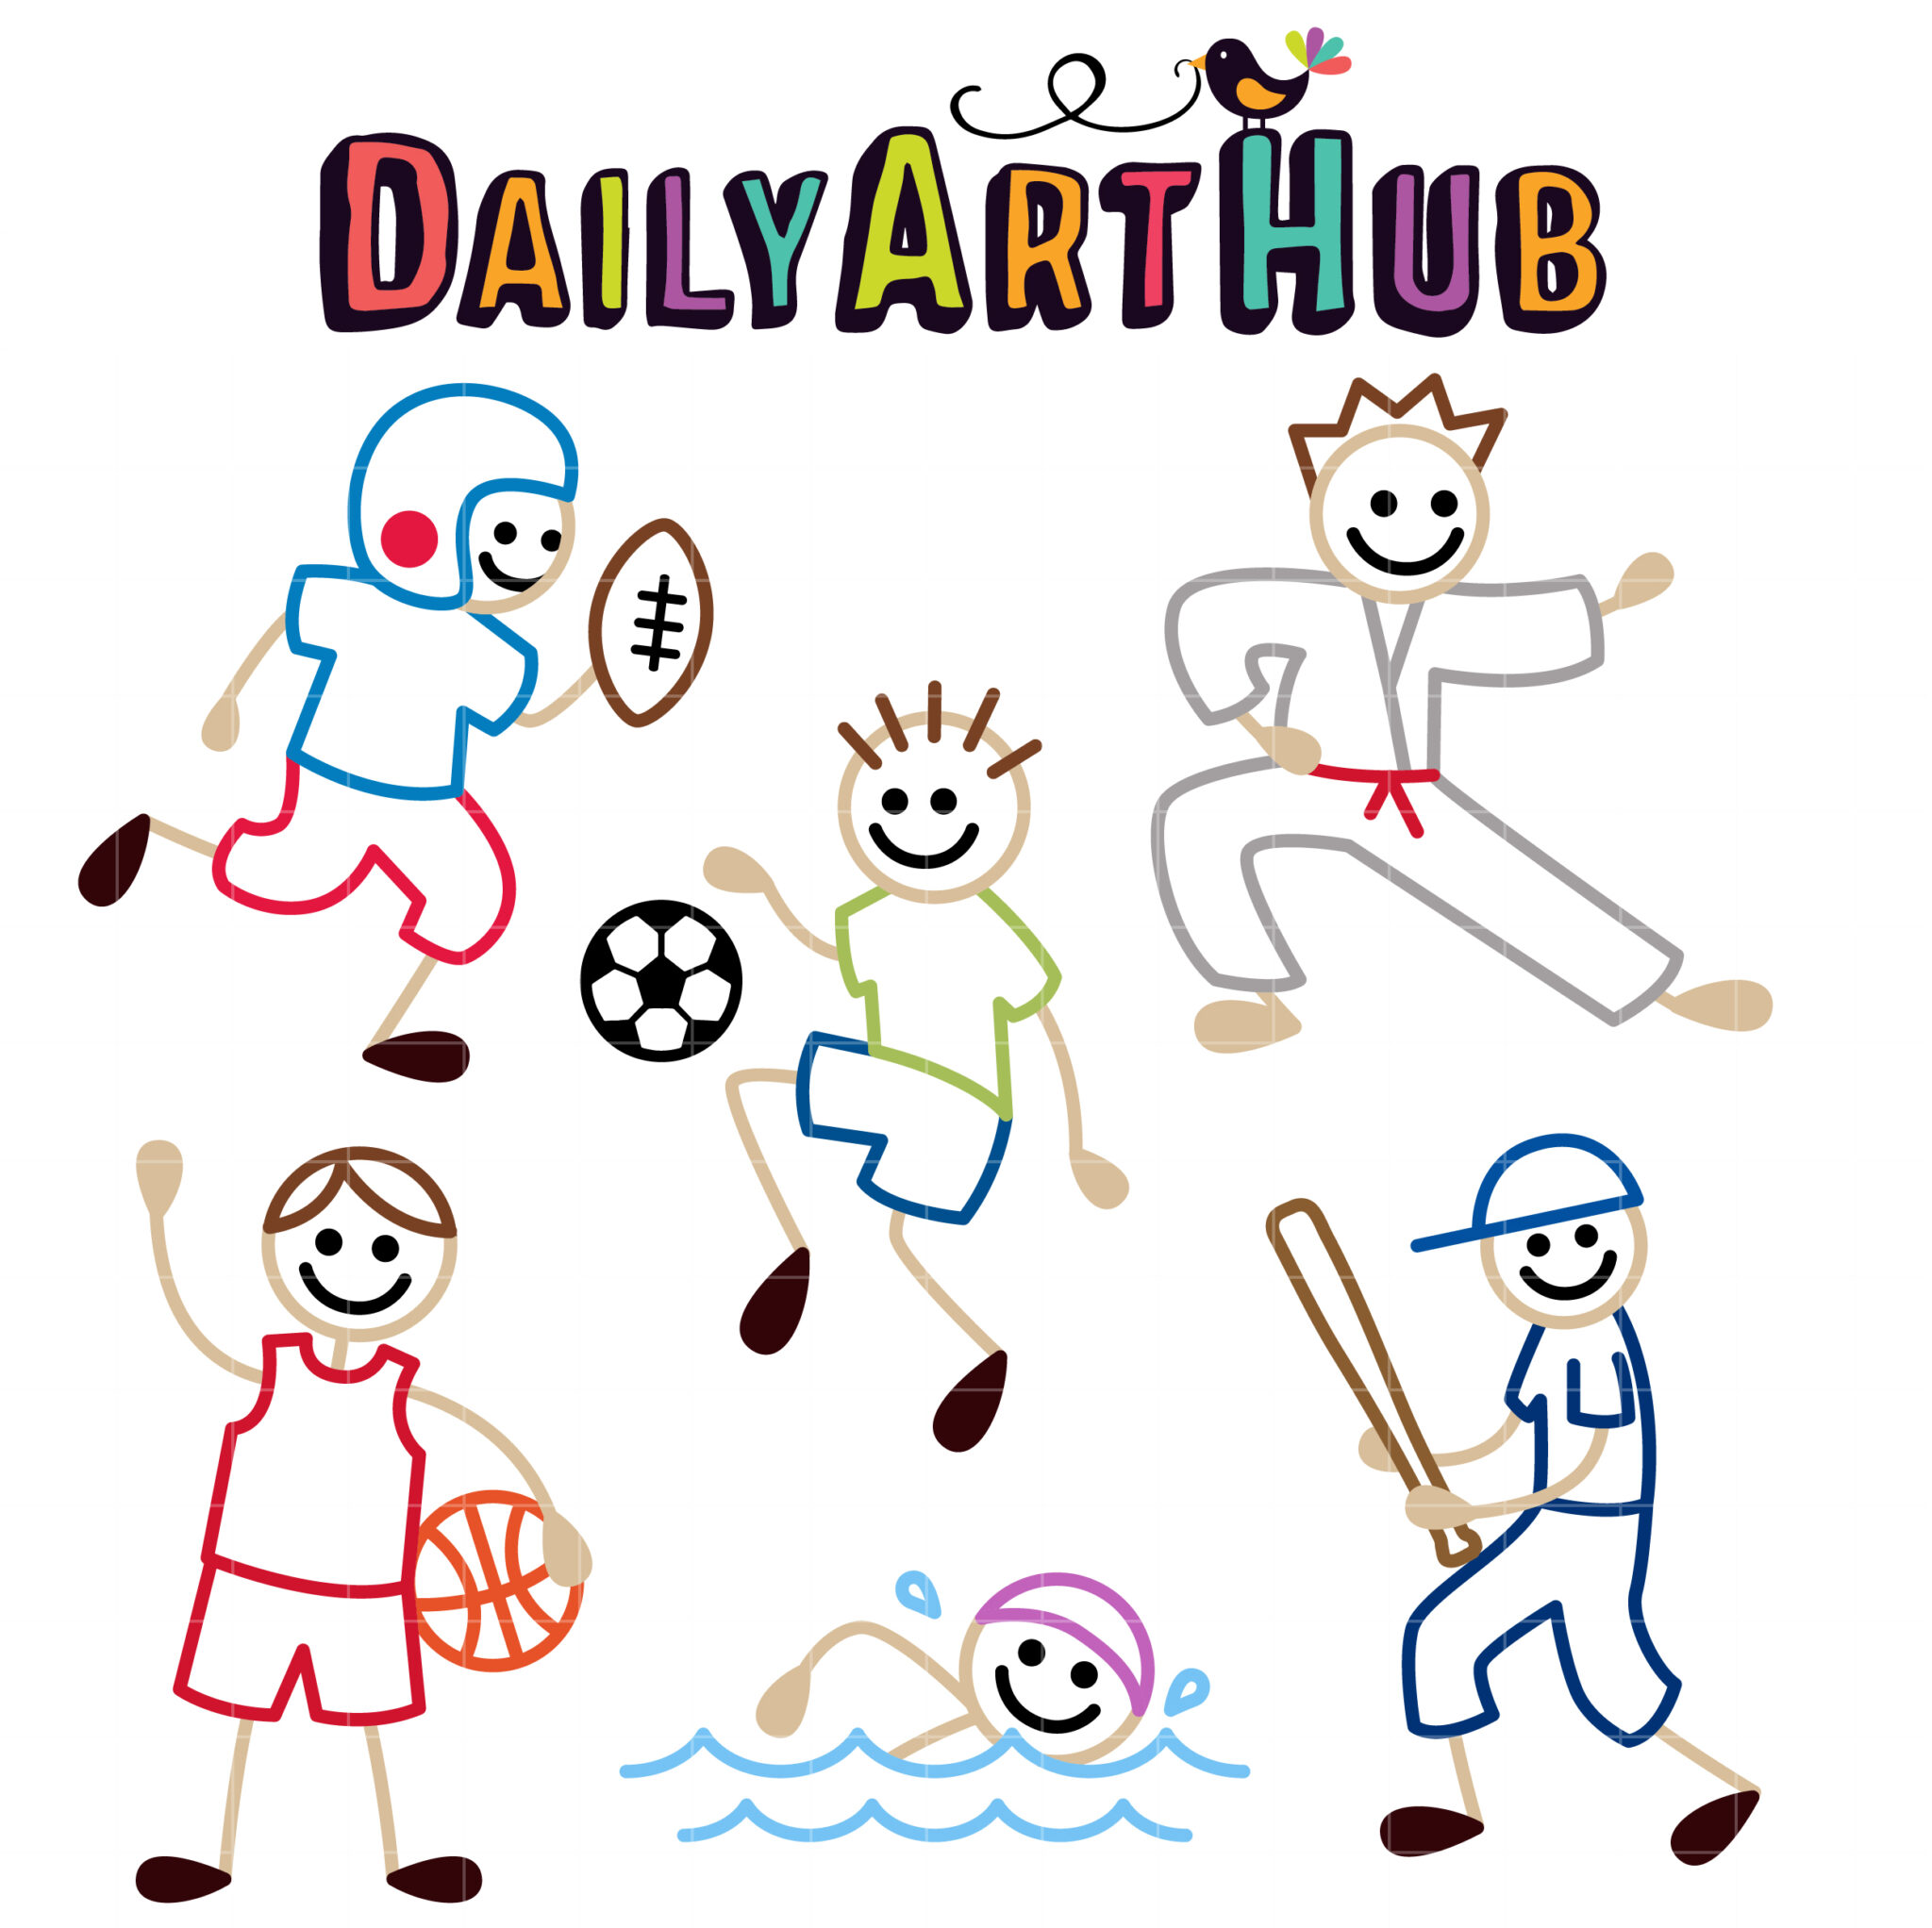 https://www.dailyarthub.com/wp-content/uploads/2019/11/Sporty-Stick-Figure-DAH-scaled.jpg